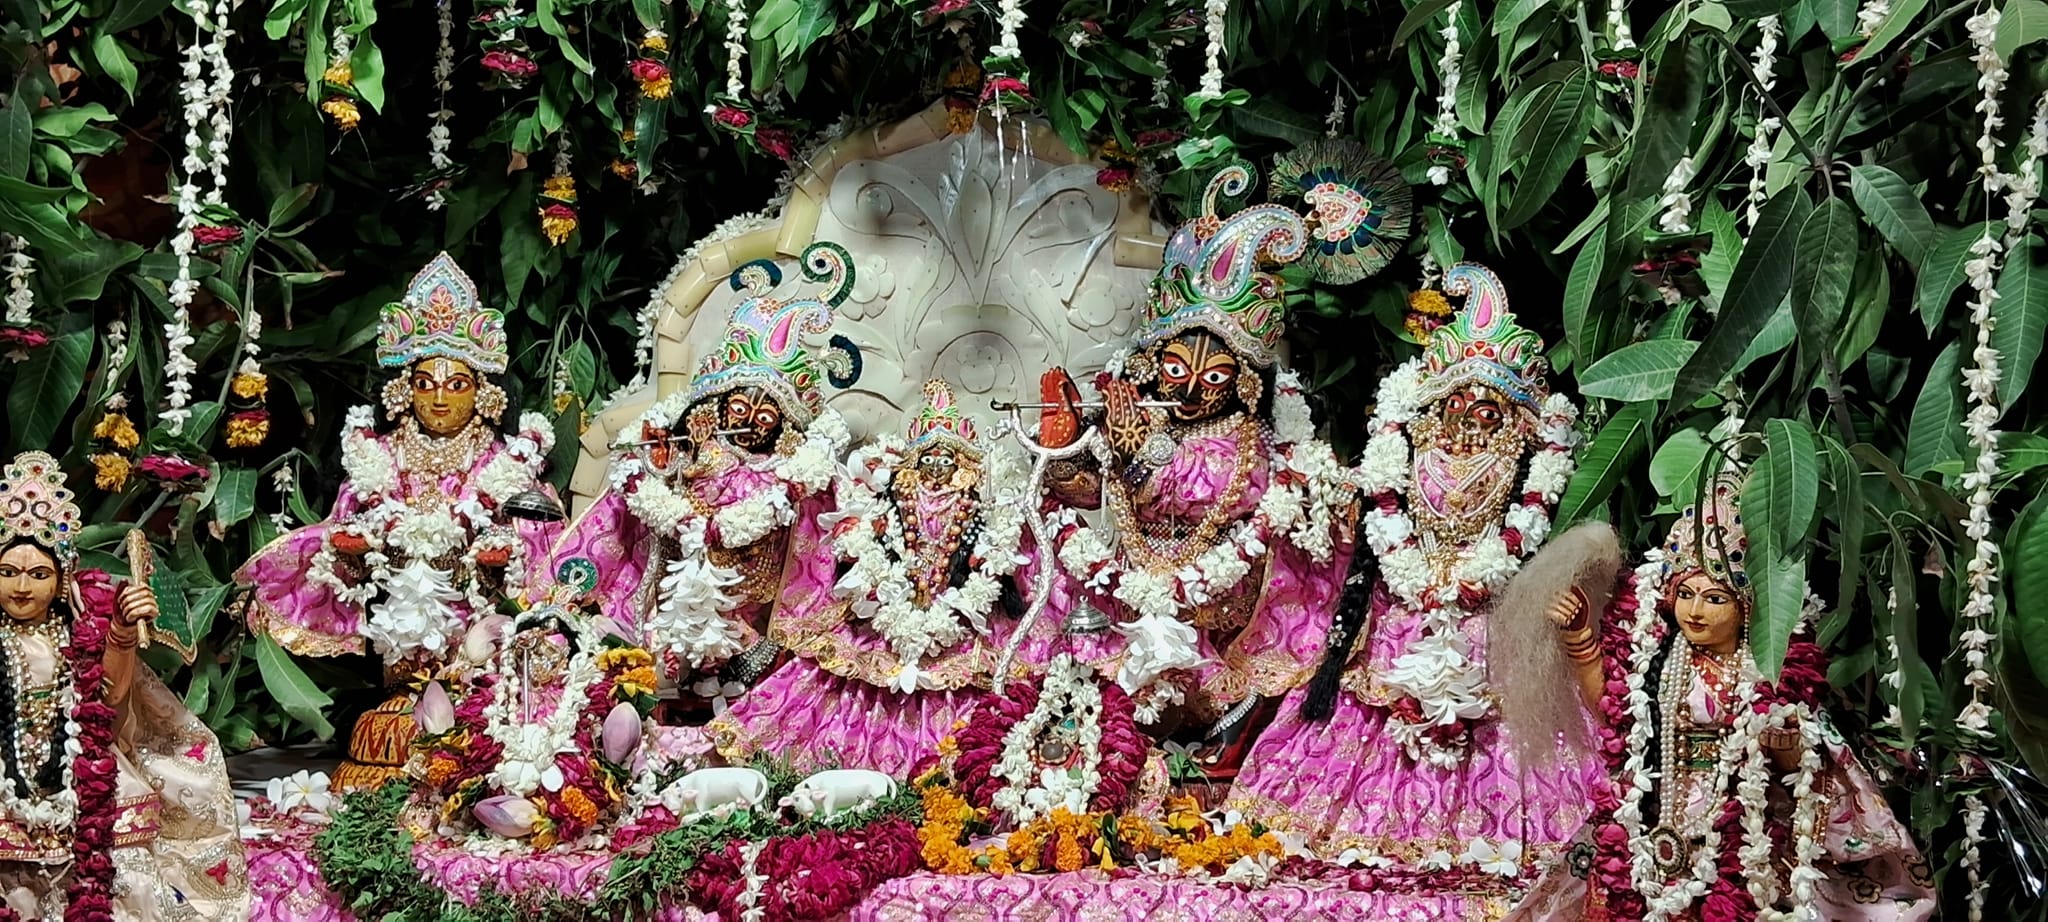 Festivities of the Sacred Purushottam Maas at Gokulananda Temple